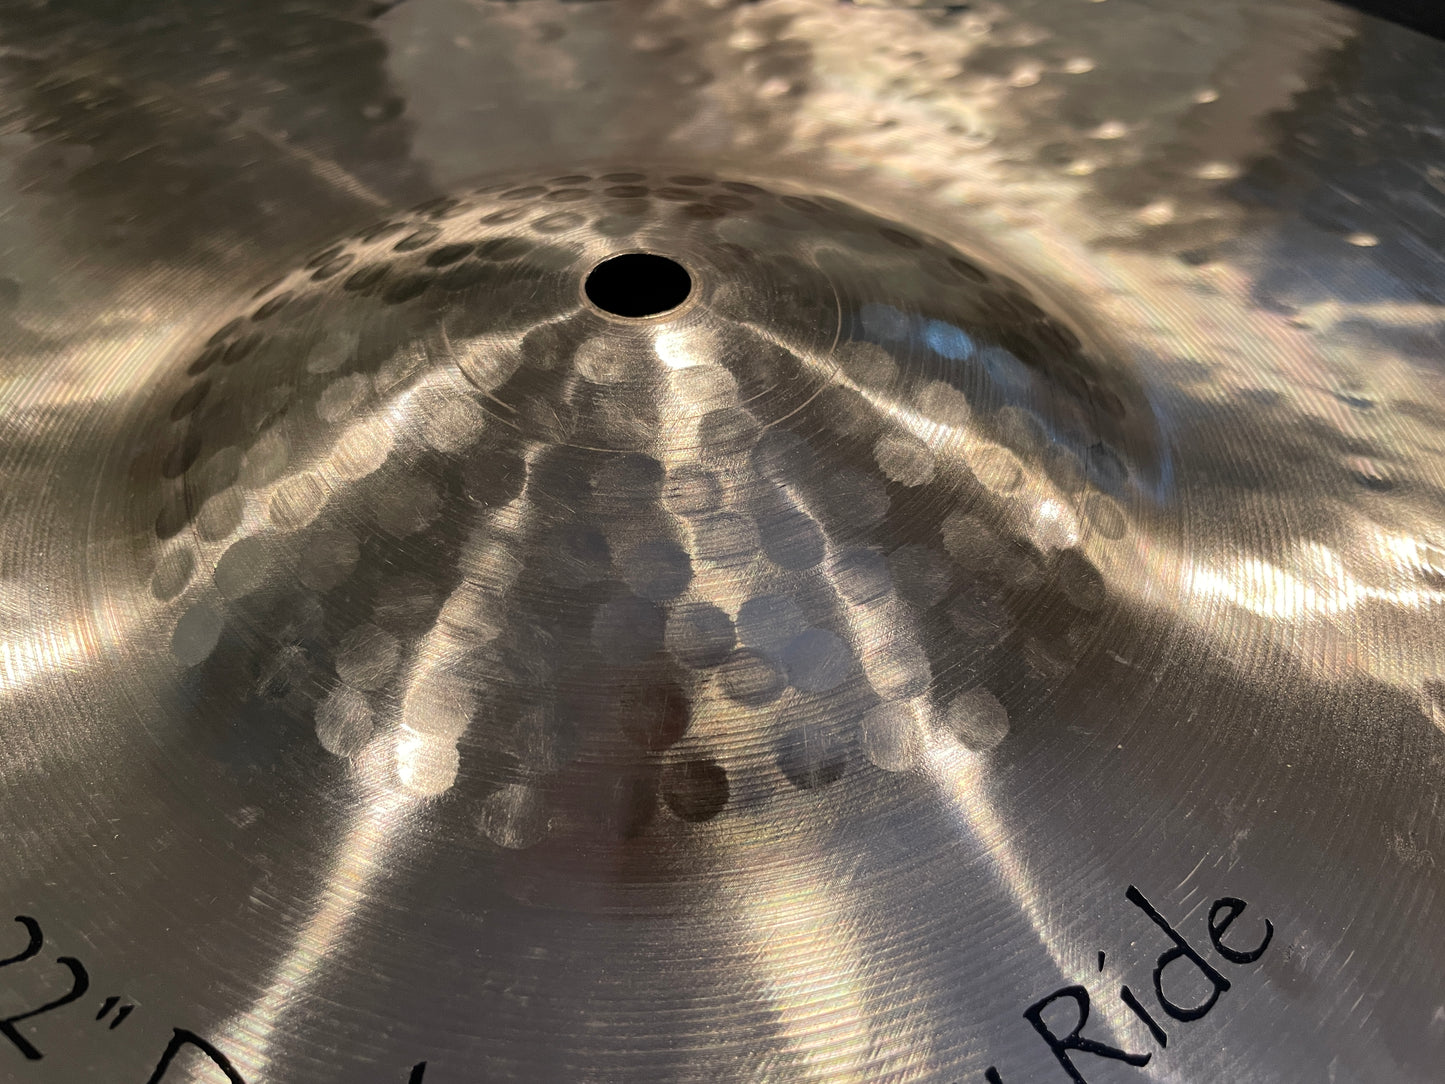 22" Paiste Signature Dark Energy Mark II Ride Cymbal 2987g